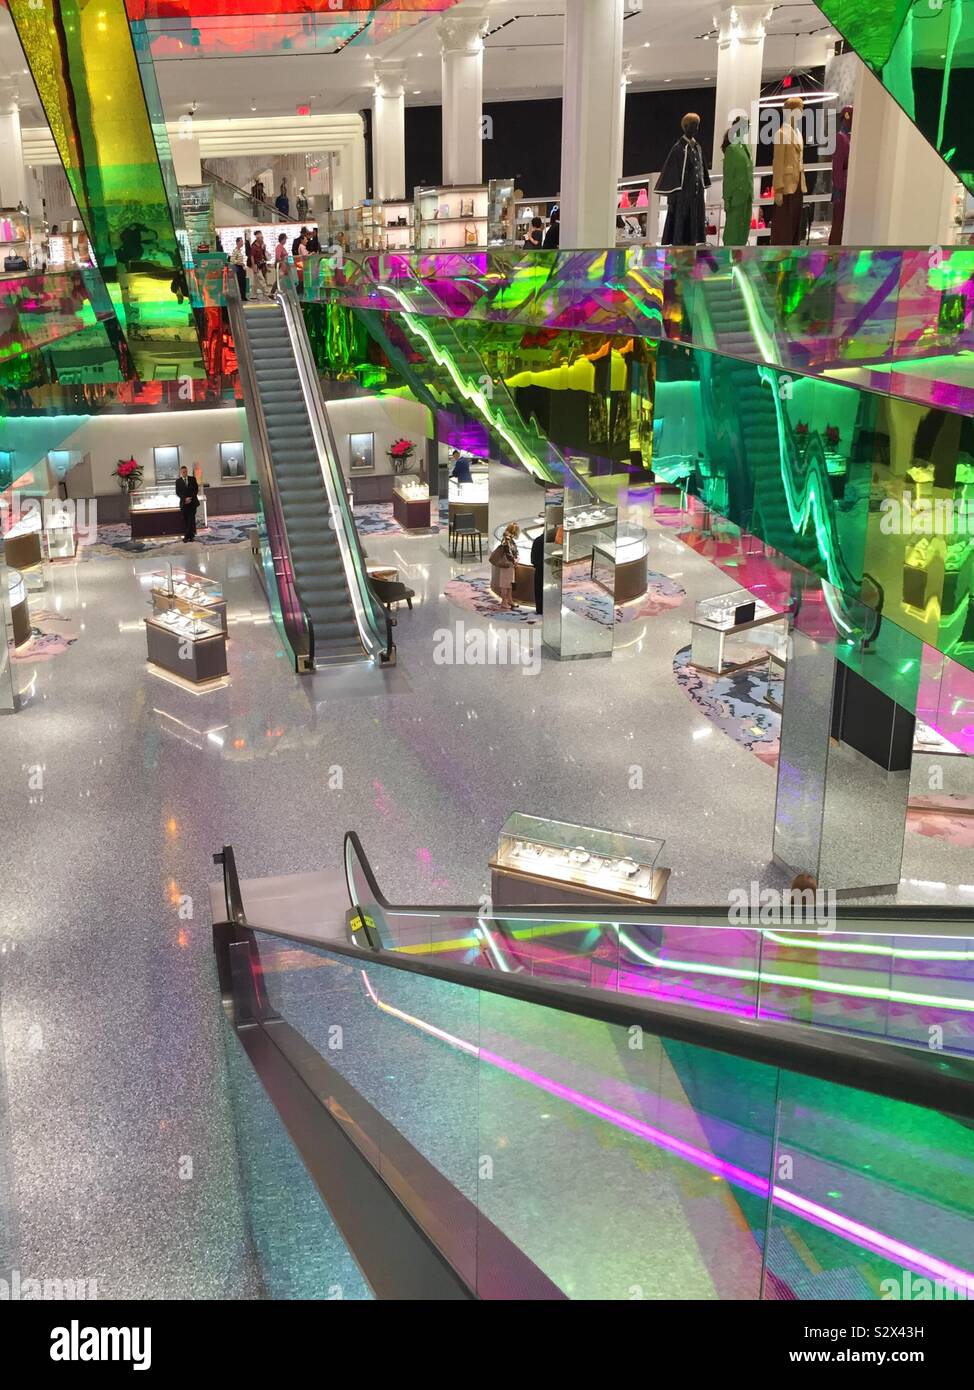 OMA adds iridescent glass escalator to New York's Saks Fifth Avenue